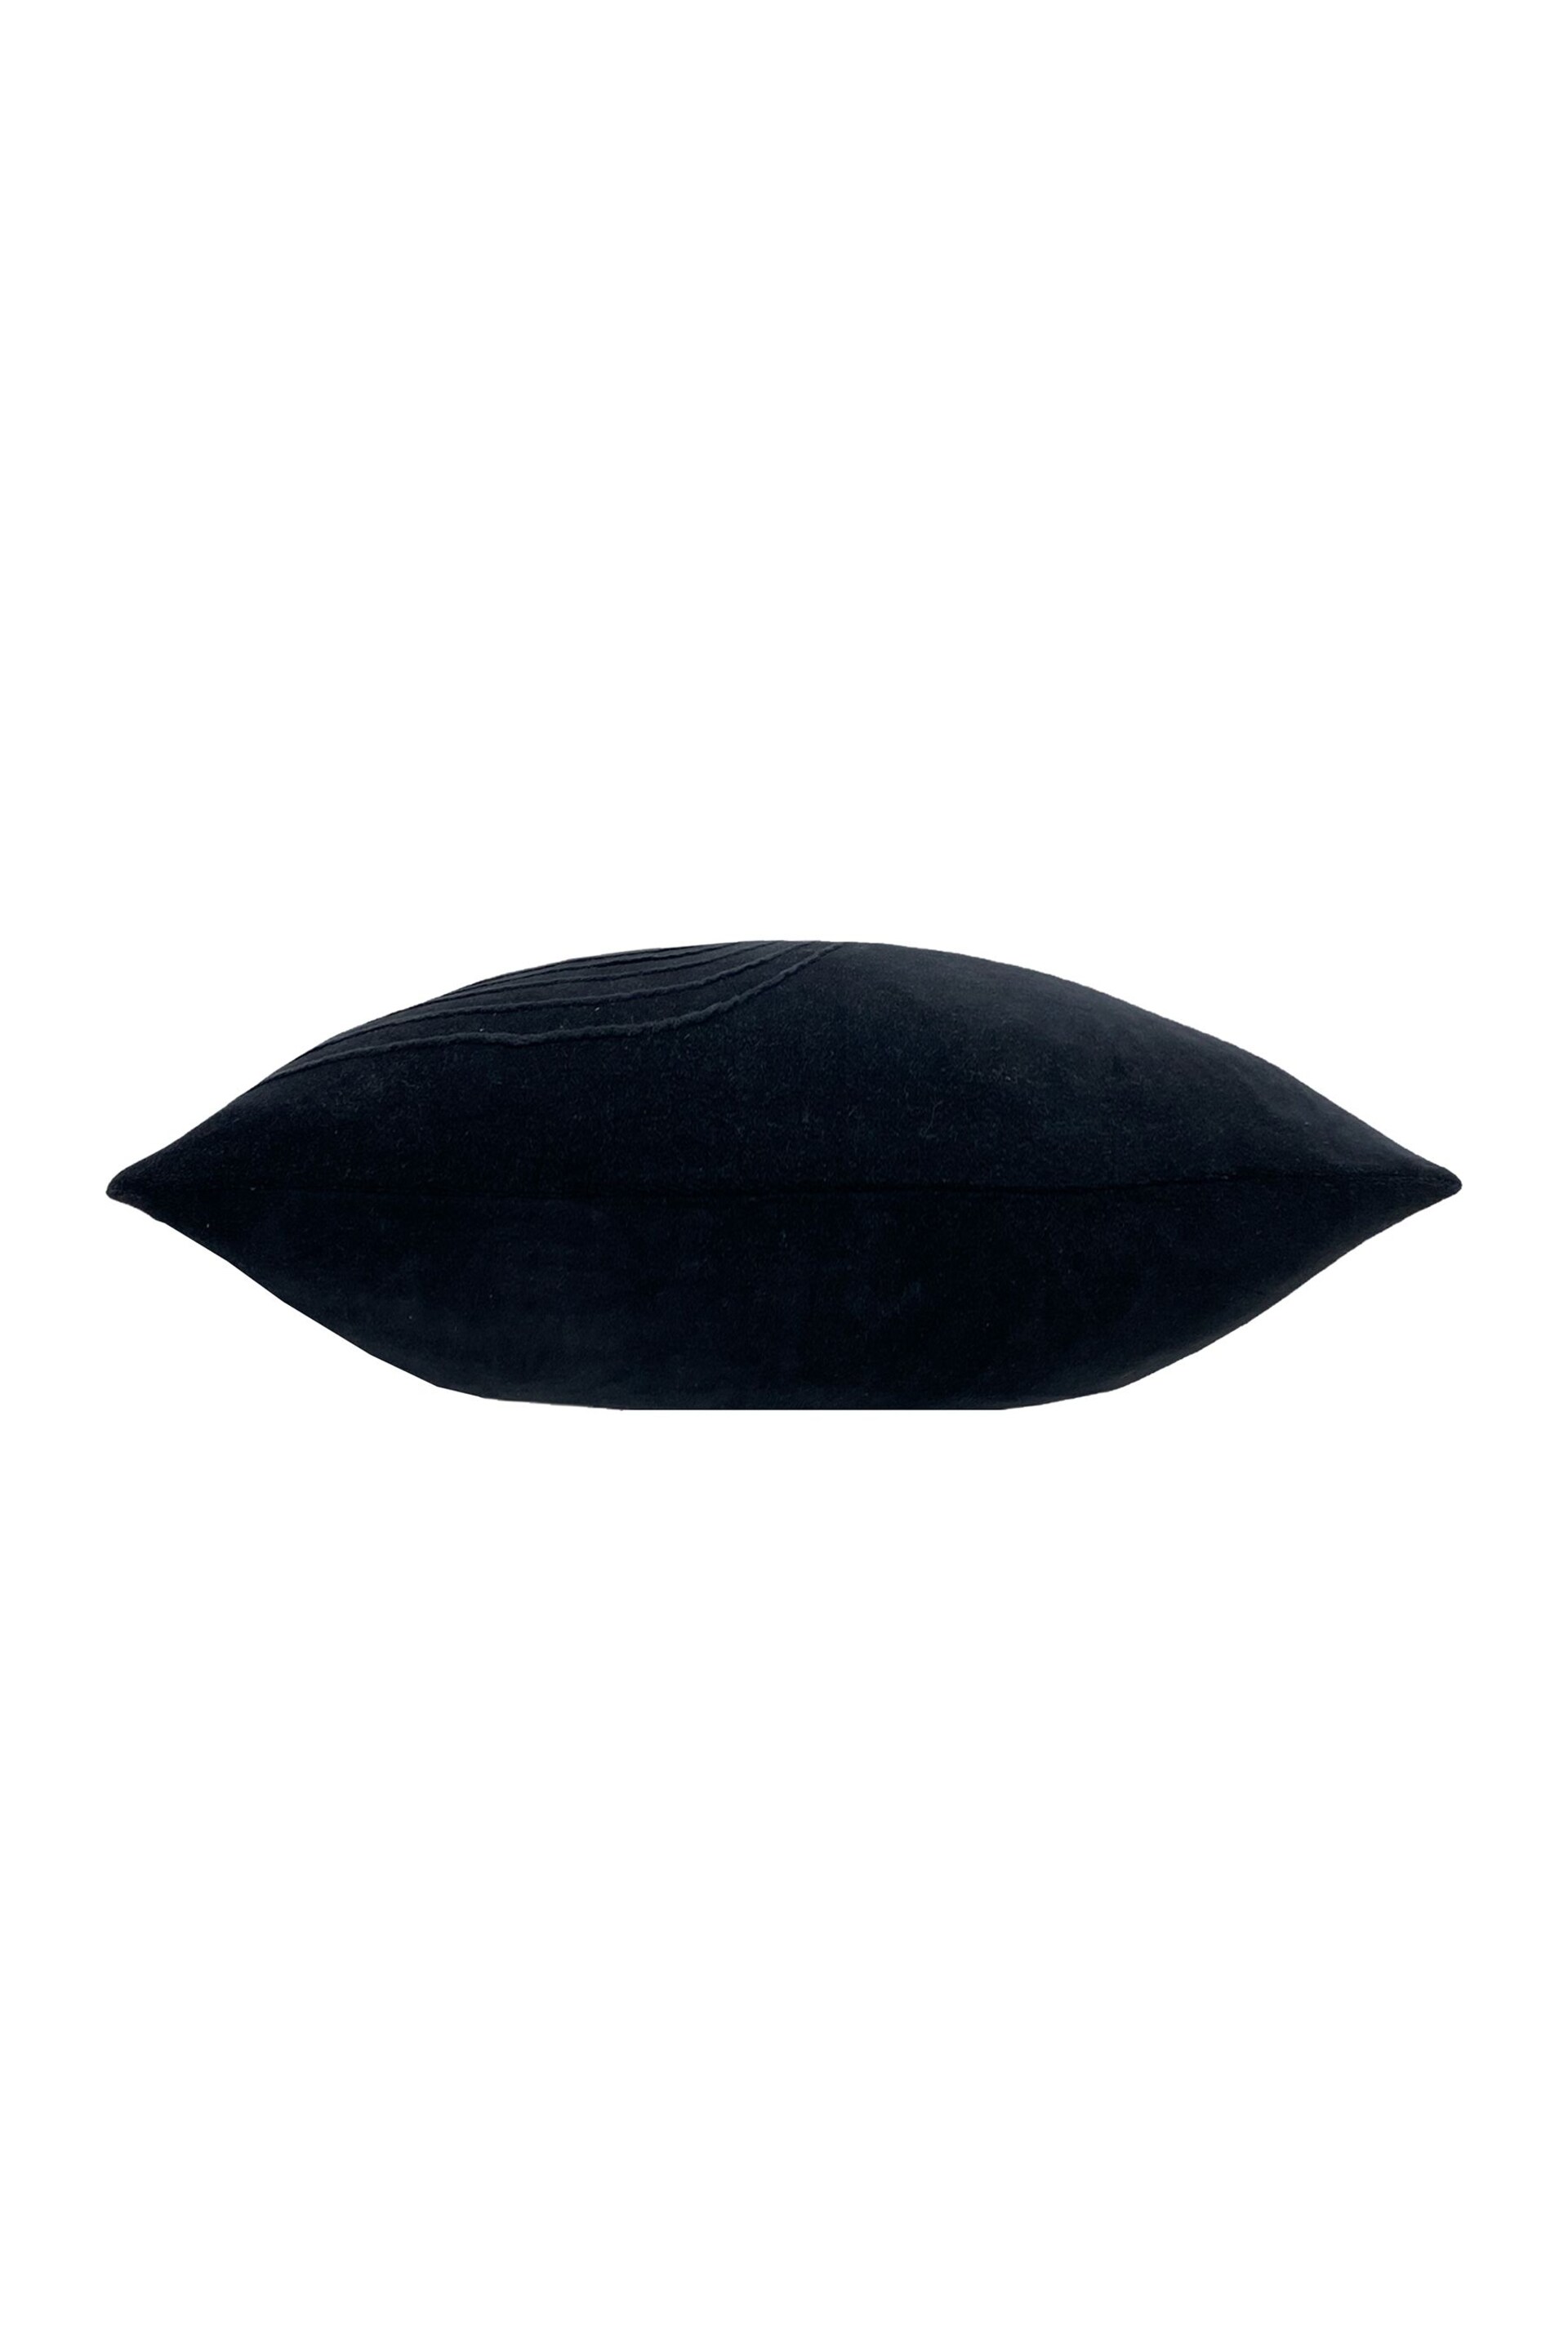 furn. Black Mangata Cushion - Image 3 of 3